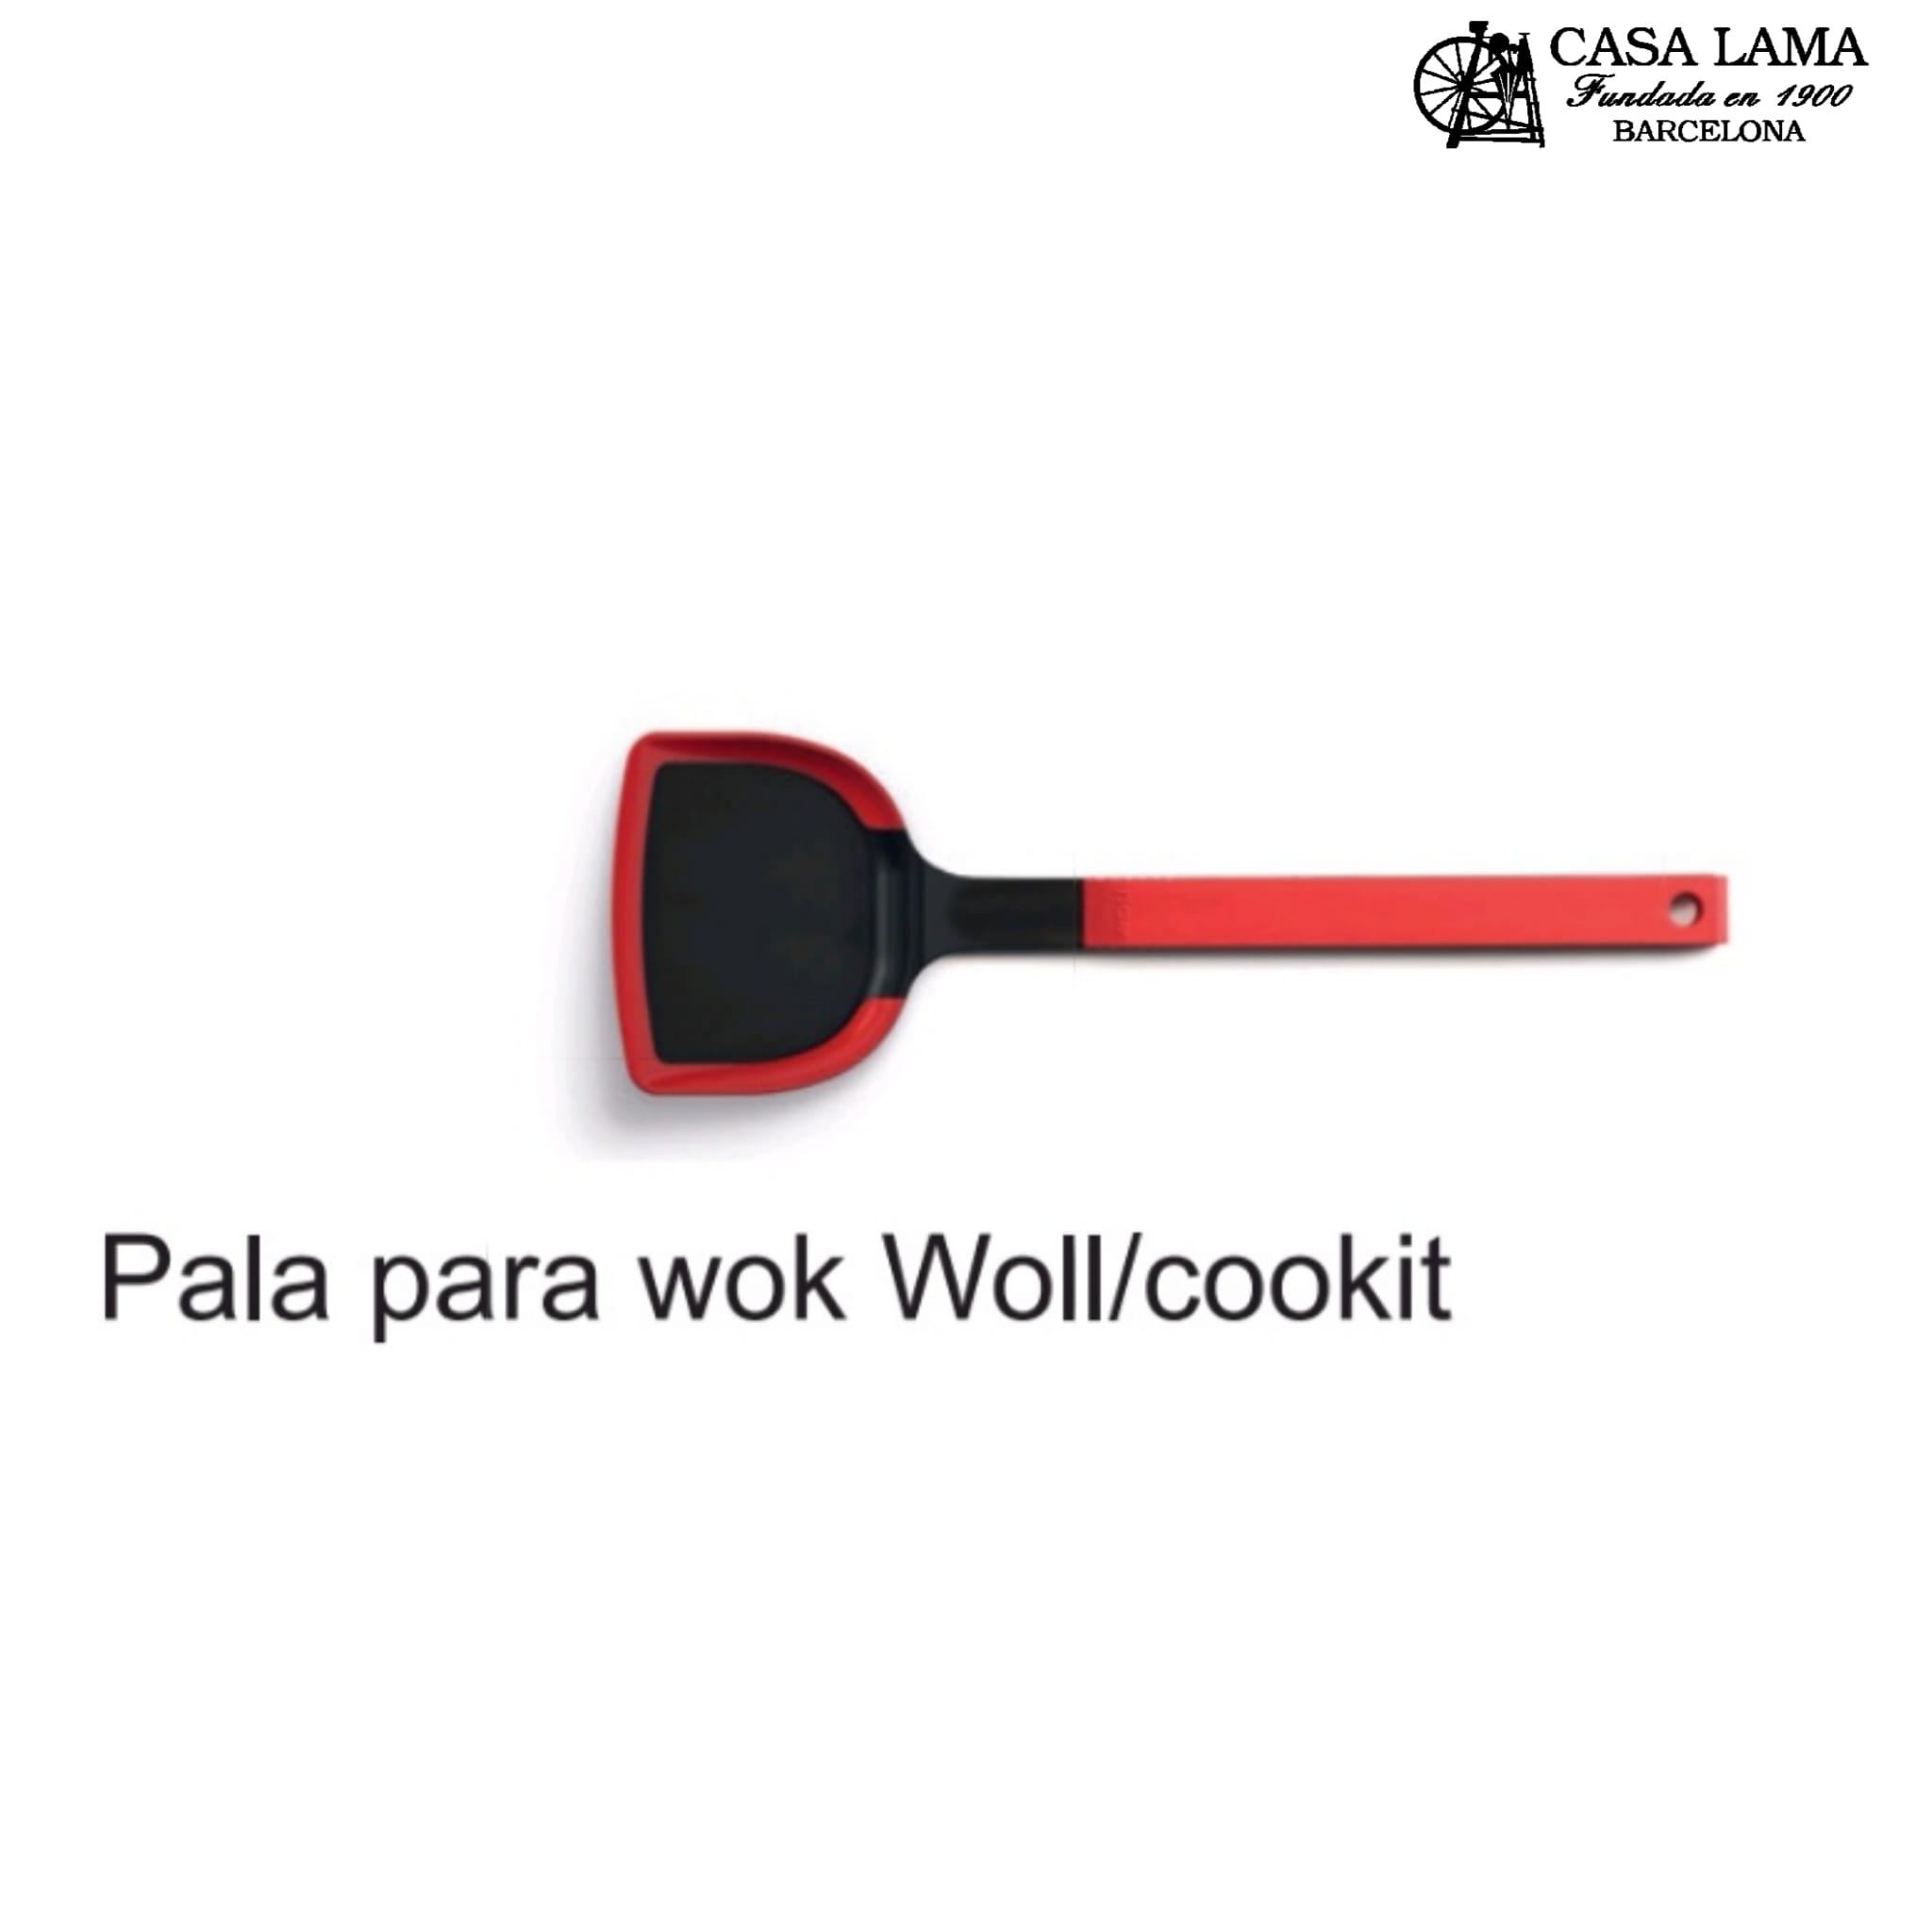 Espátula larga para Wok Woll/Cookit